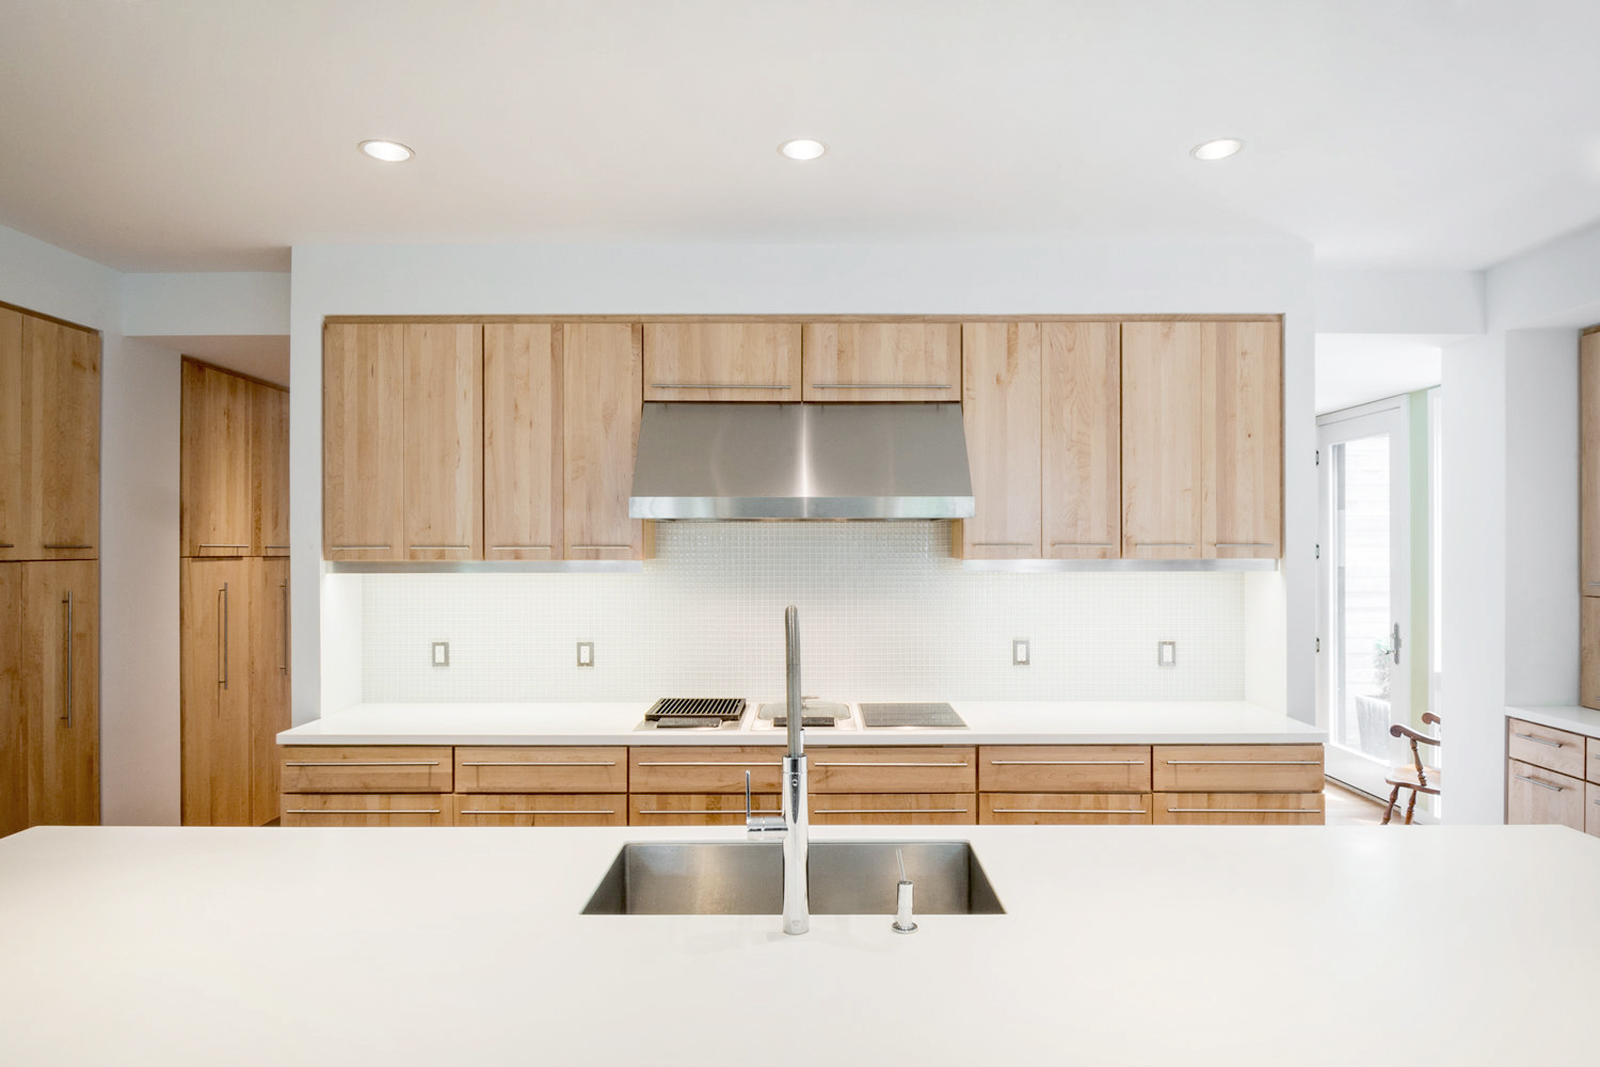 res4-resolution-4-architecture-modern-modular-house-prefab-home-three-pines-residential-interior-kitchen.jpg